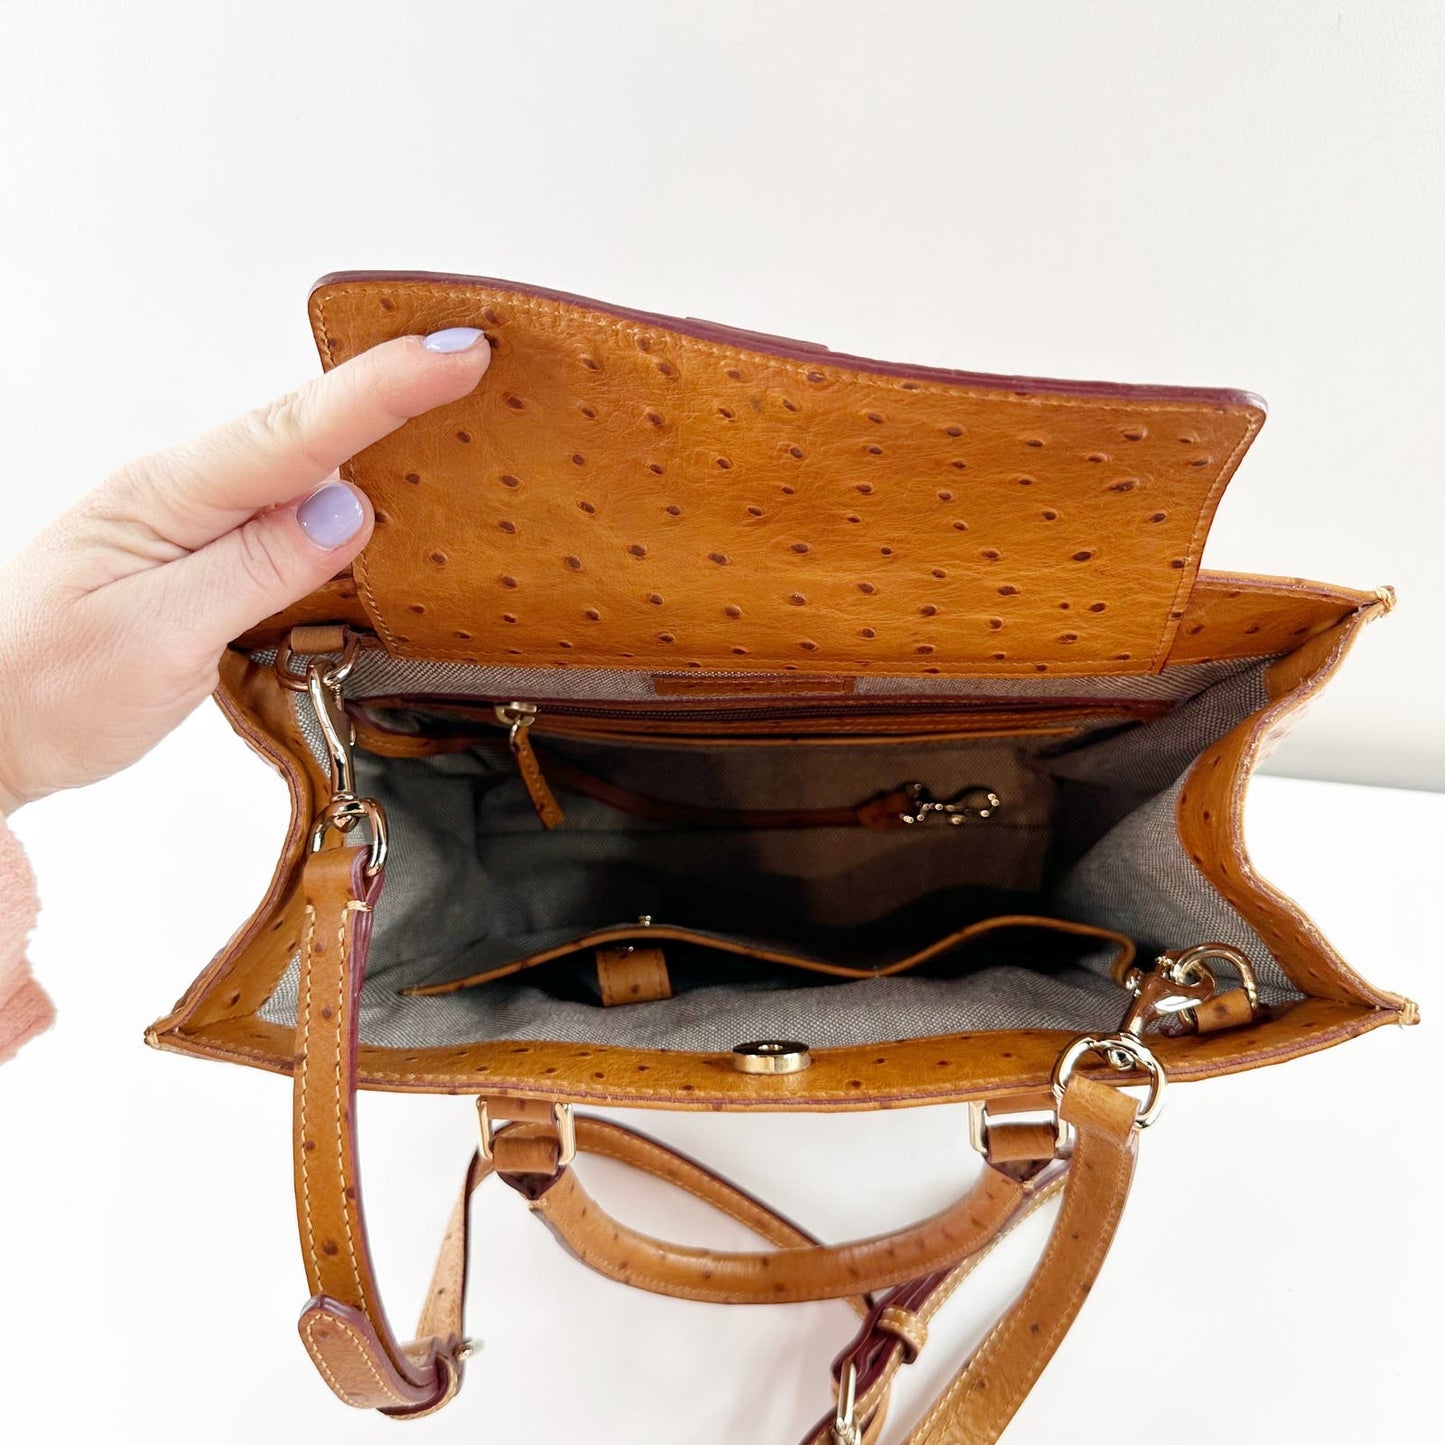 Dooney & Bourke Ostrich Square Shopper Barlow Tote Bag Purse Brown Leather